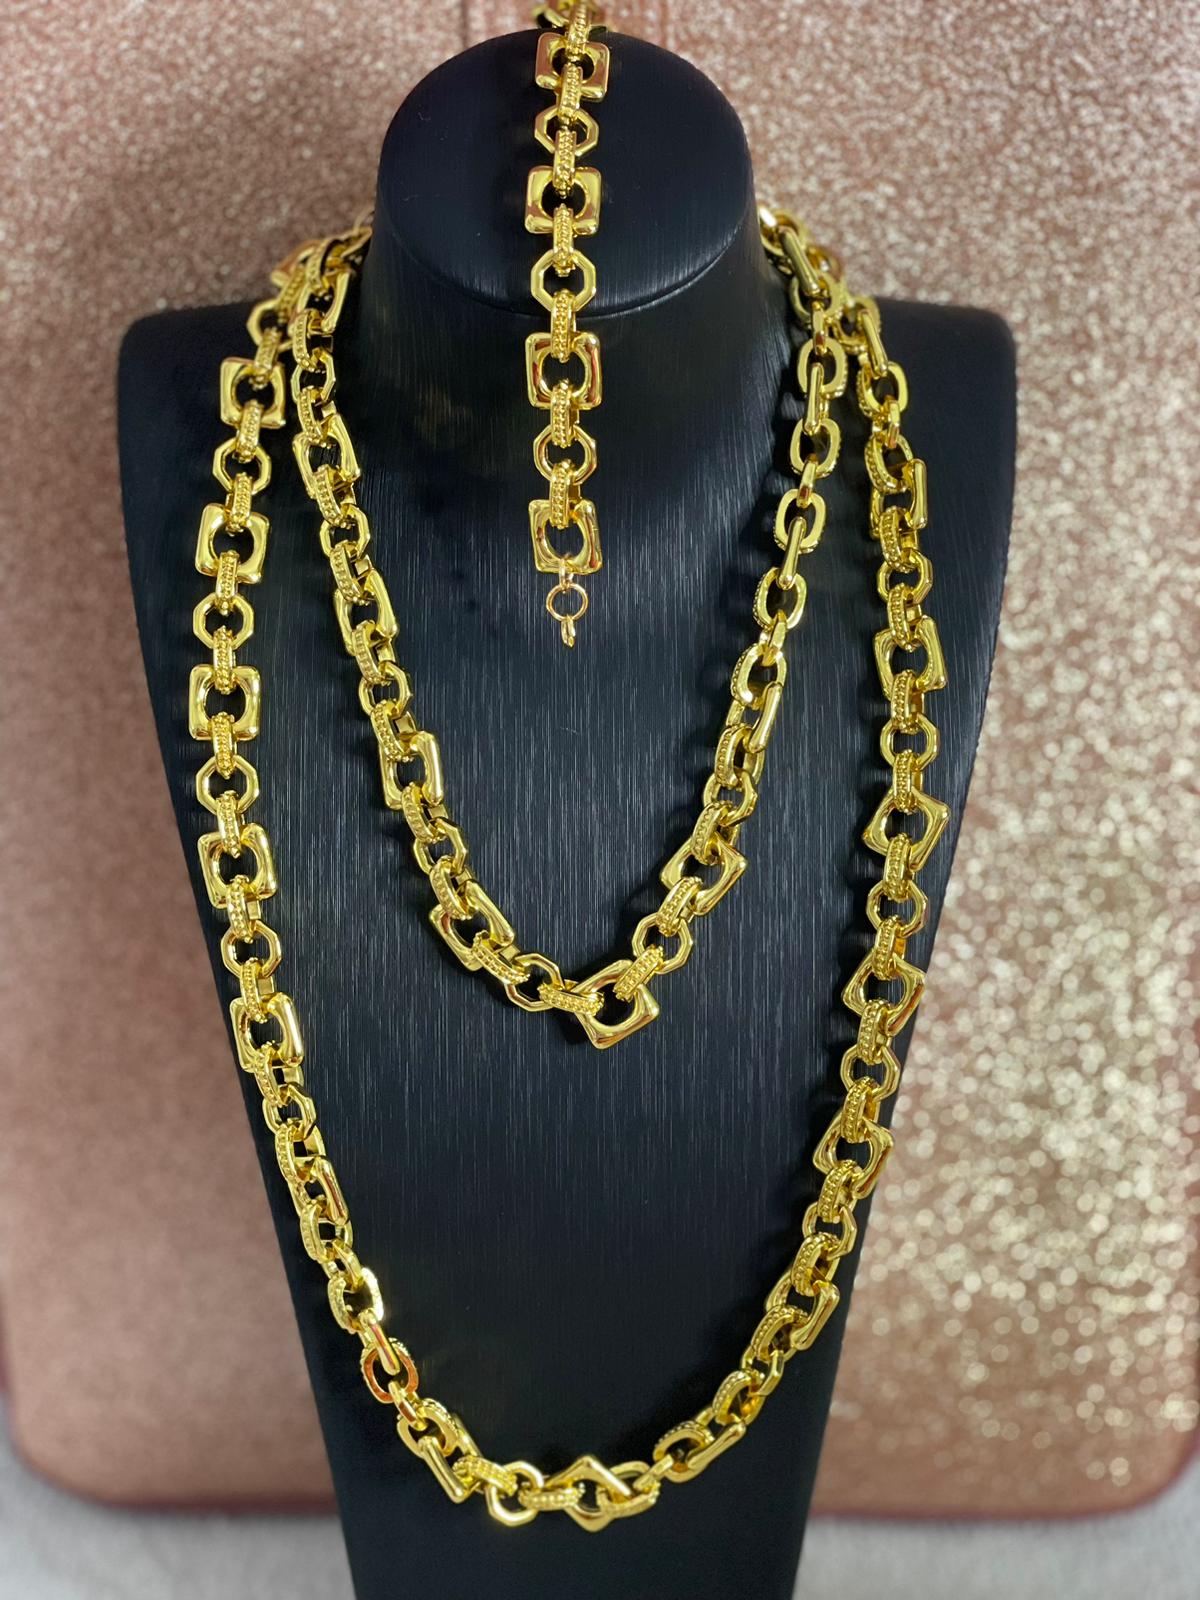 Squares and Circles necklace and bracelet set by La Belle